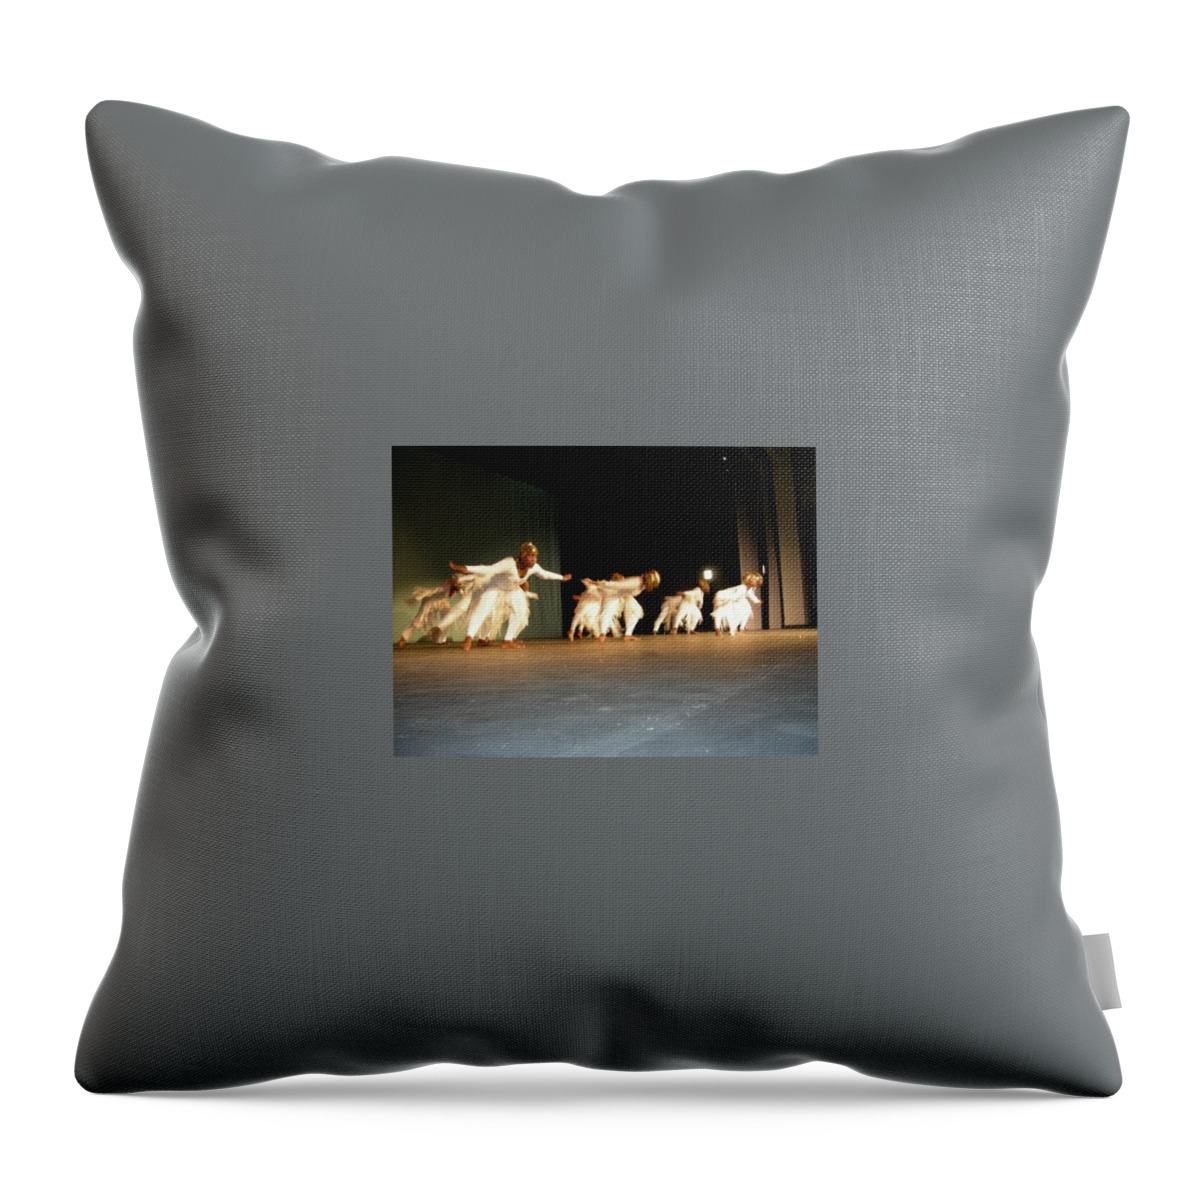  Throw Pillow featuring the photograph Saintee 3 by Trevor A Smith